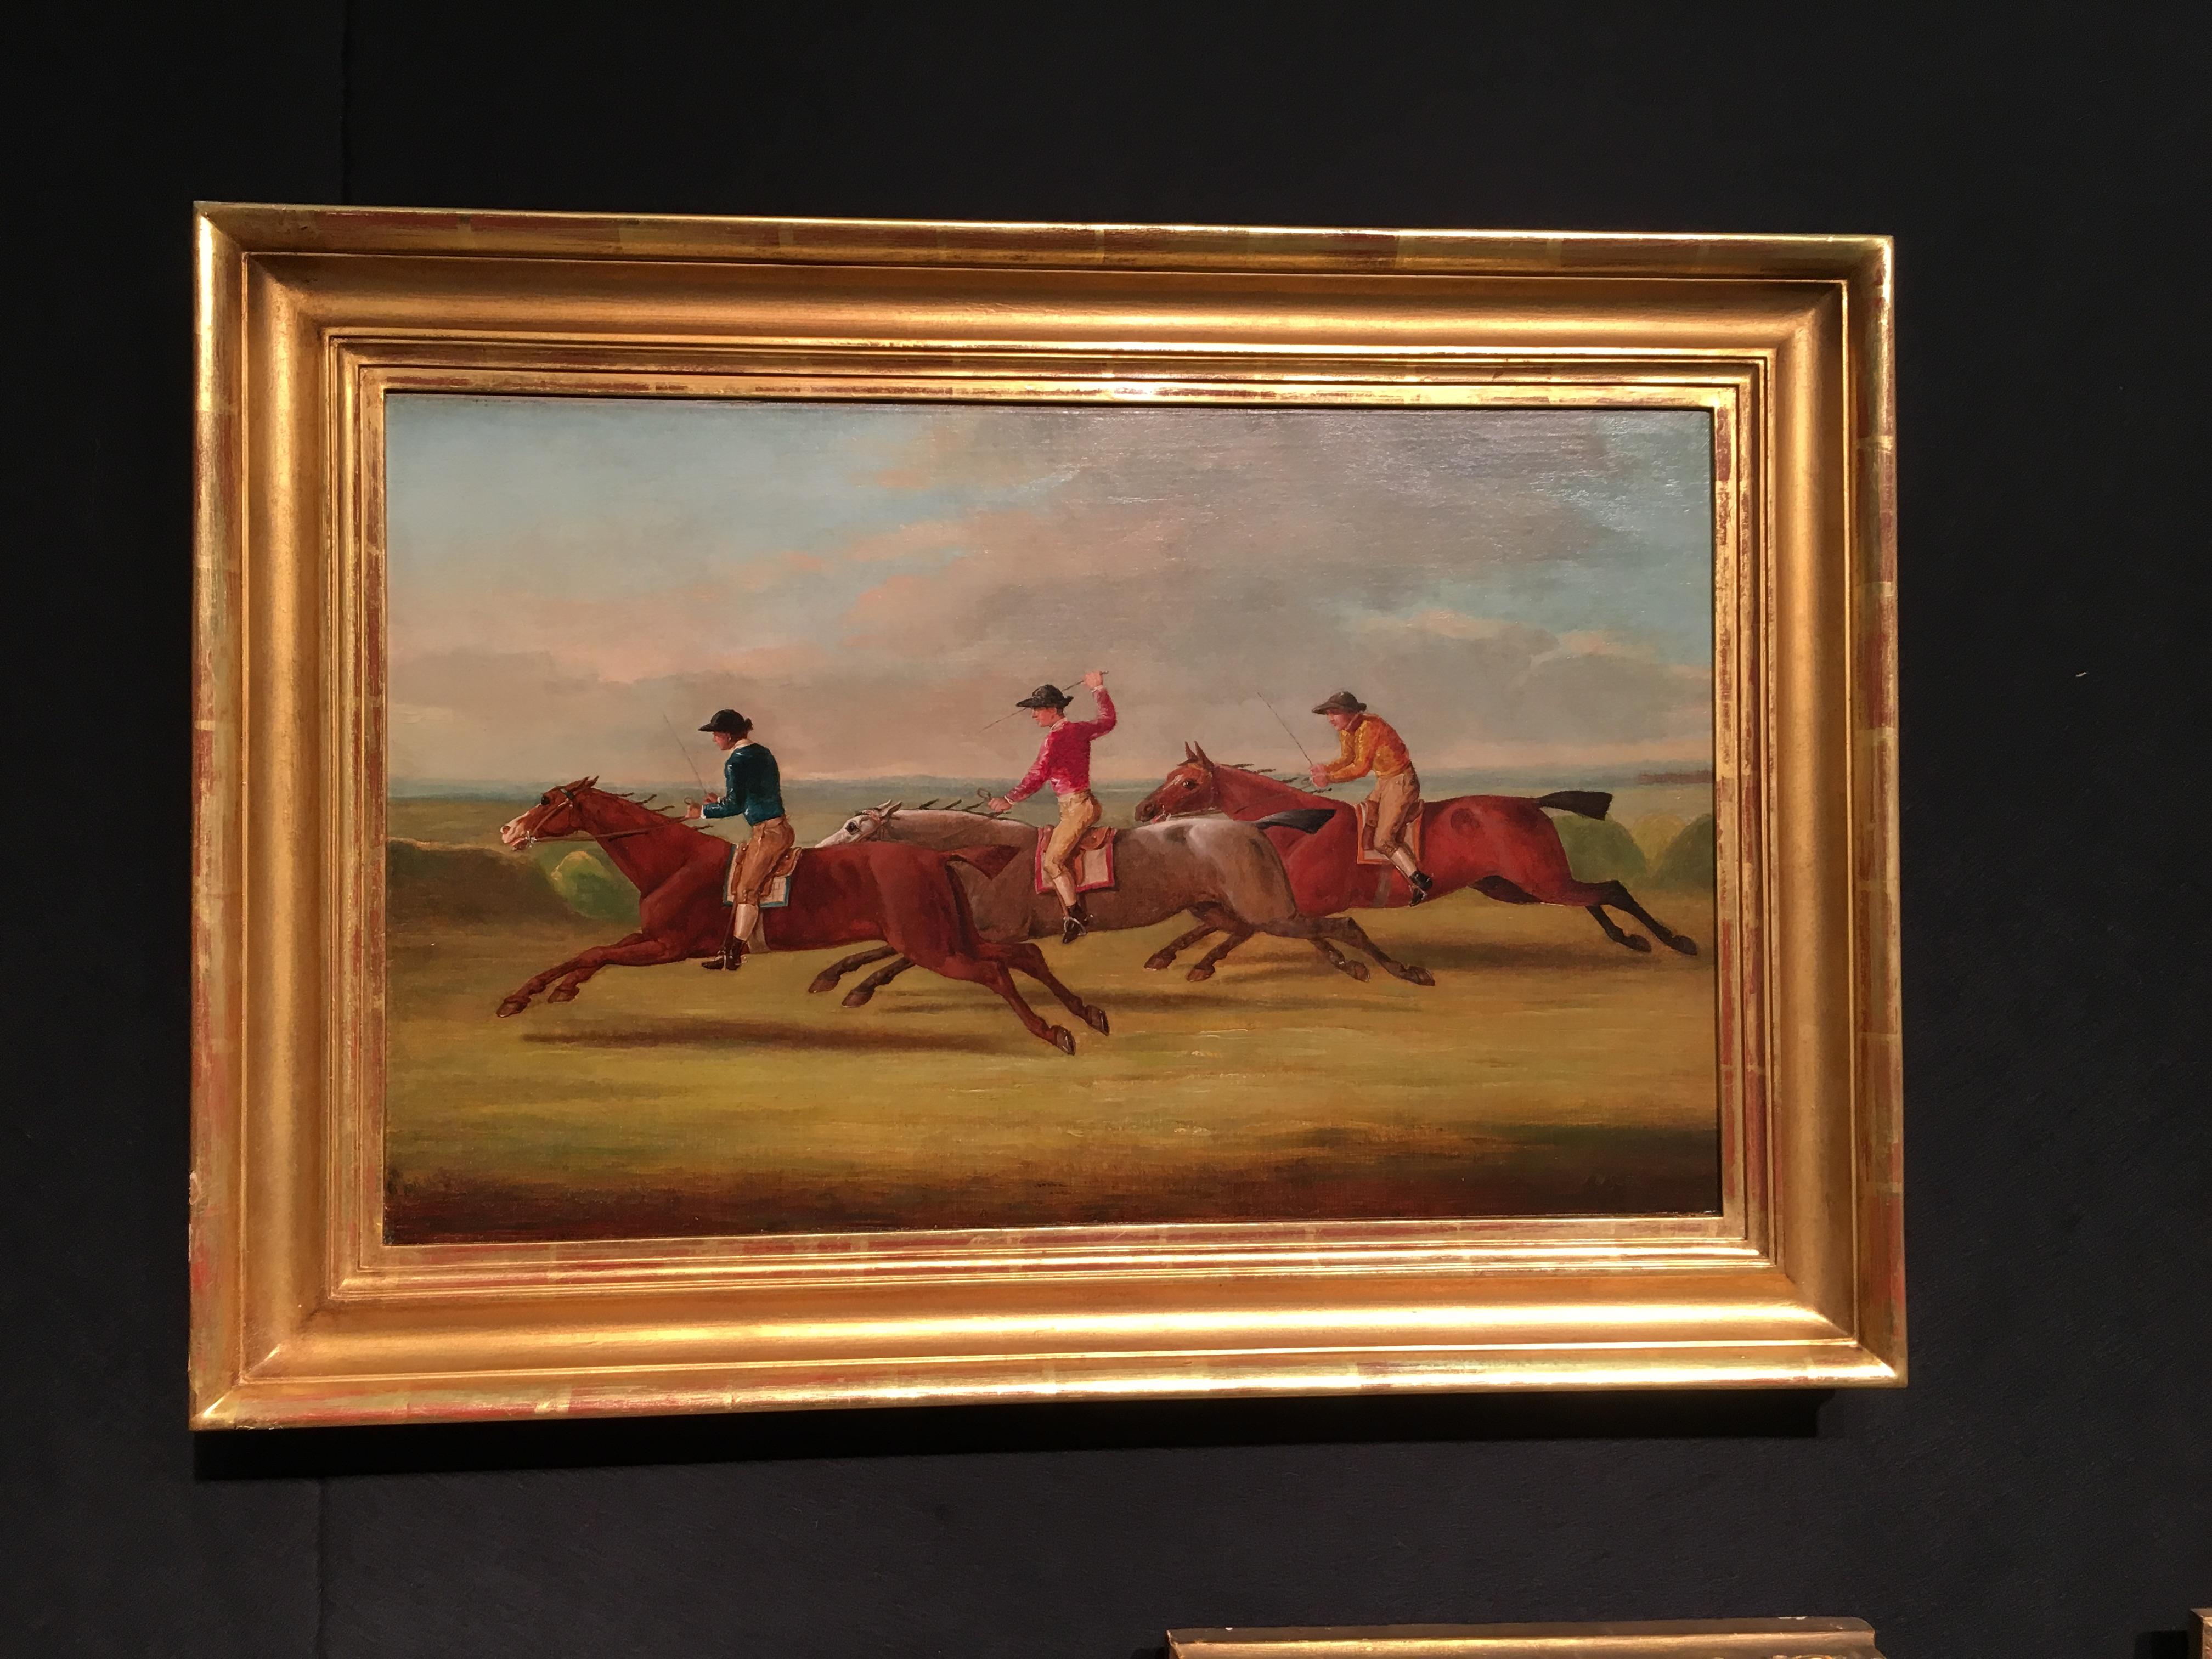 John Nost Sartorius Figurative Painting - English horse racing scene with three horses and jockeys in mid gallop